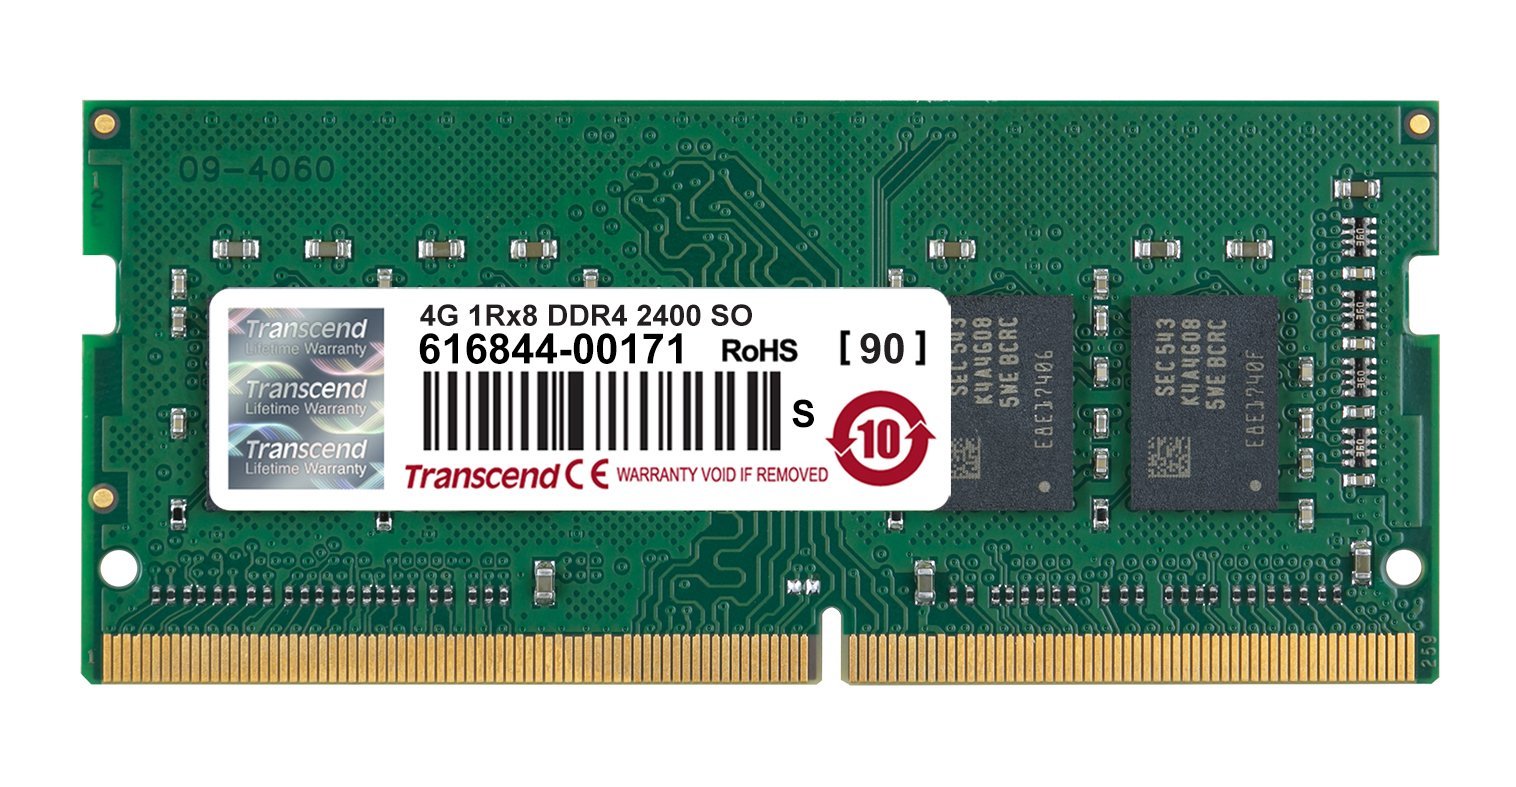 Transcend 4GB DDR4-2400 Unbuffered SO-DIMM